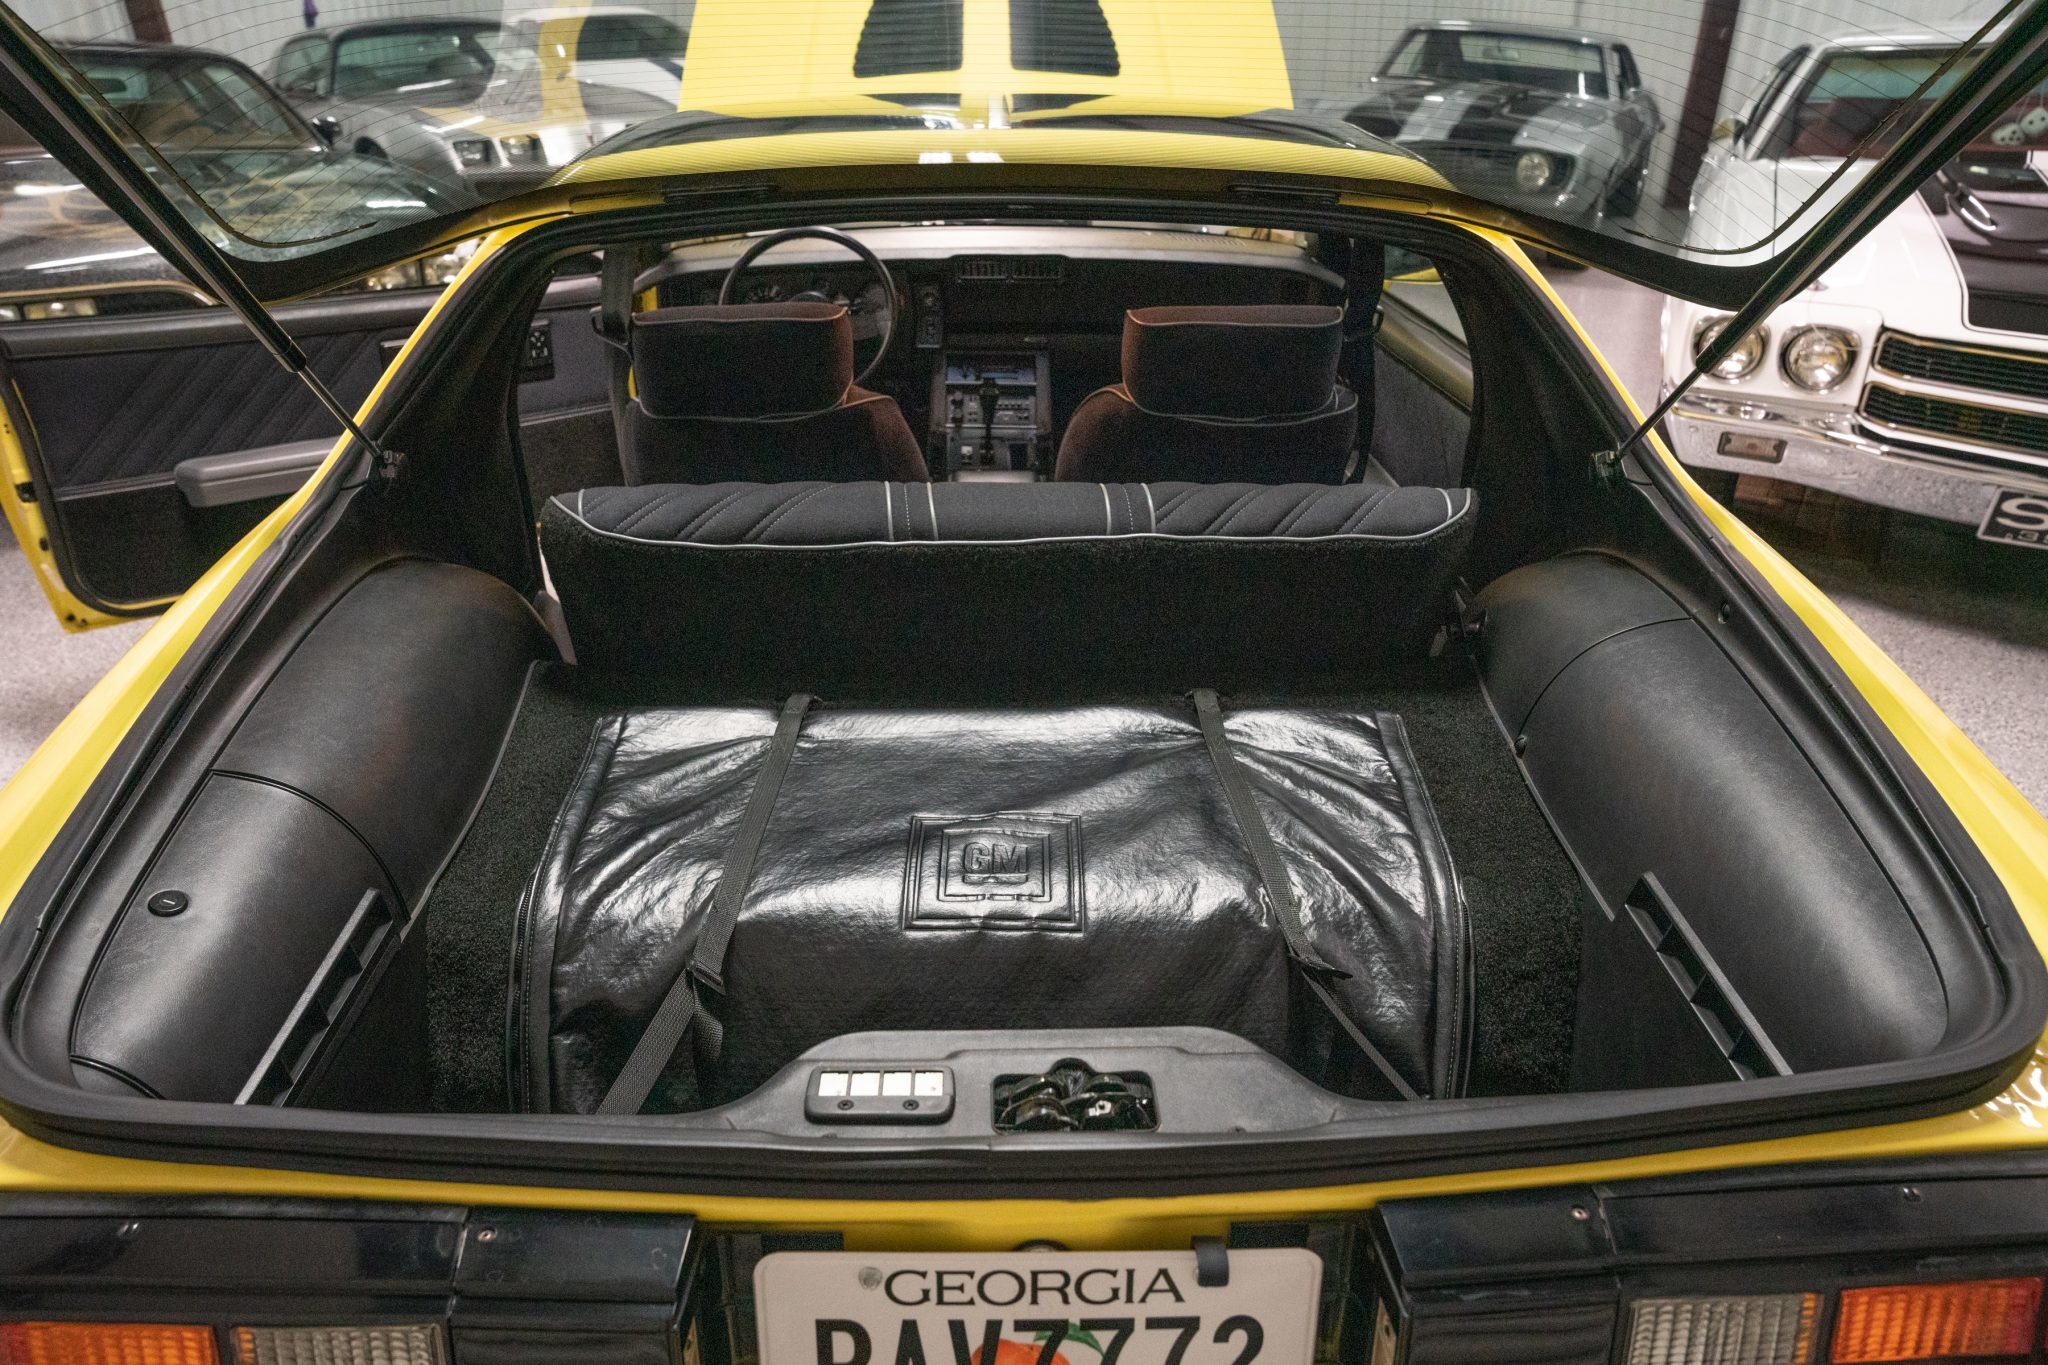 Chevrolet Camaro 1987 года выпуска за 56000 долларов